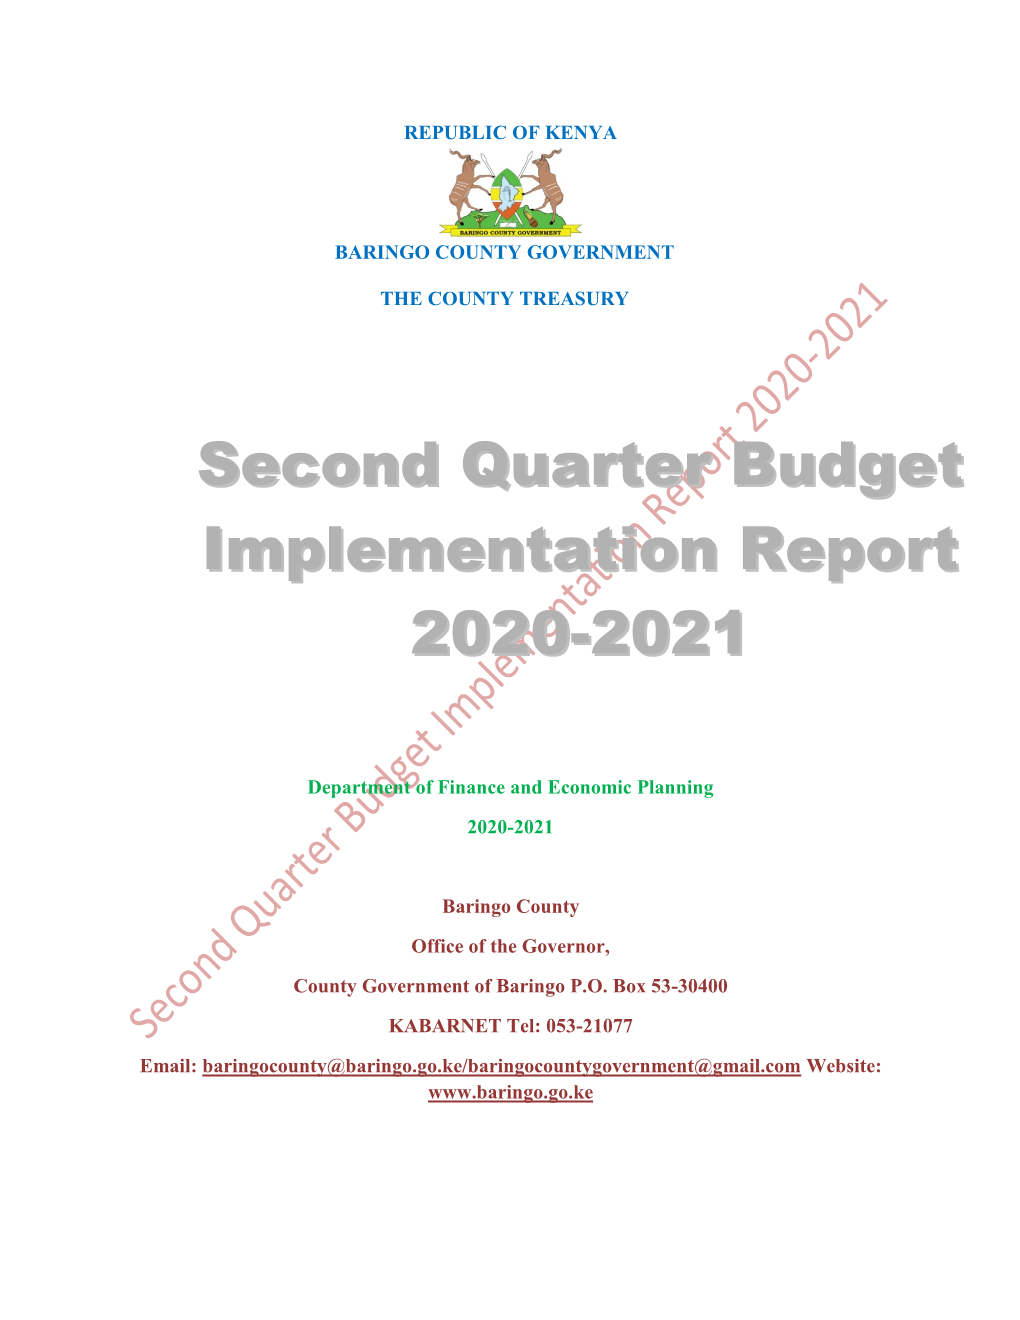 Second Quarter Budget Implementation Report 2020-2021